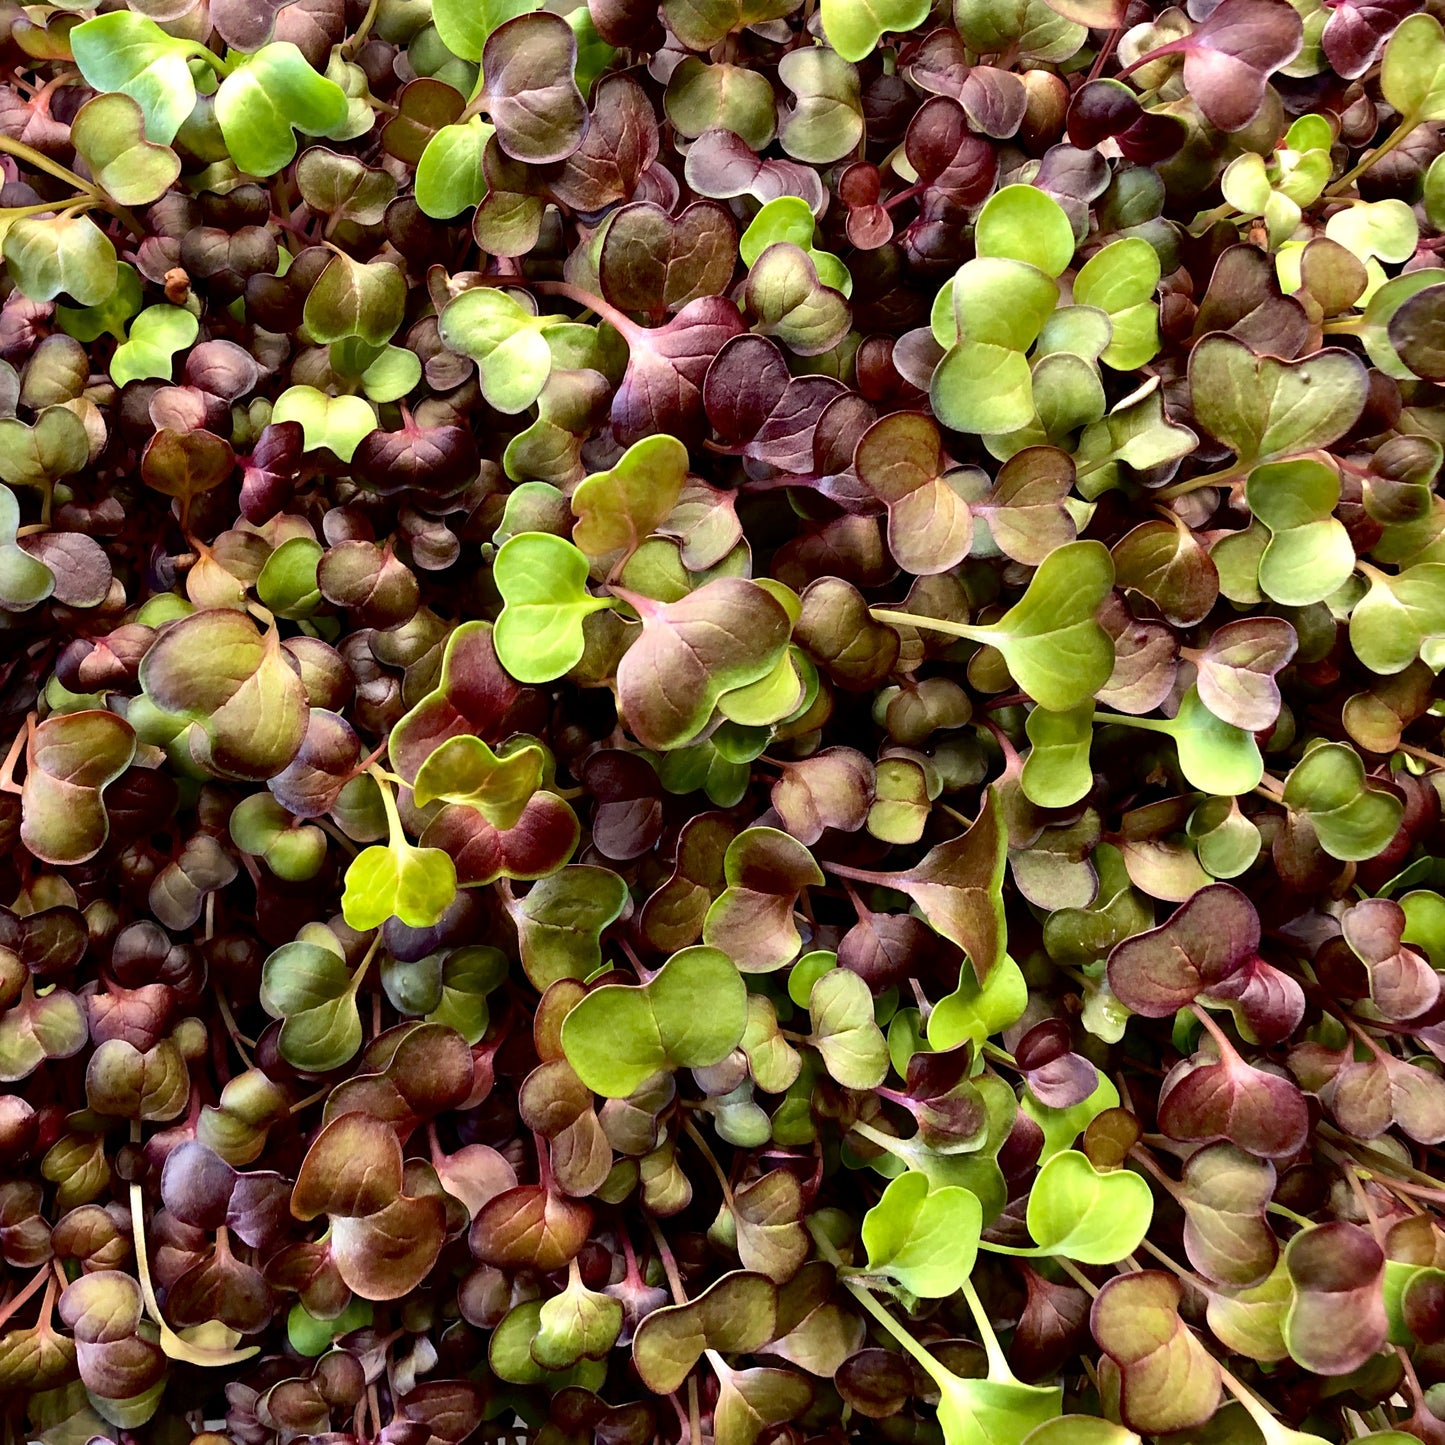 Radish microgreens have bright green and purple heart shaped leaves